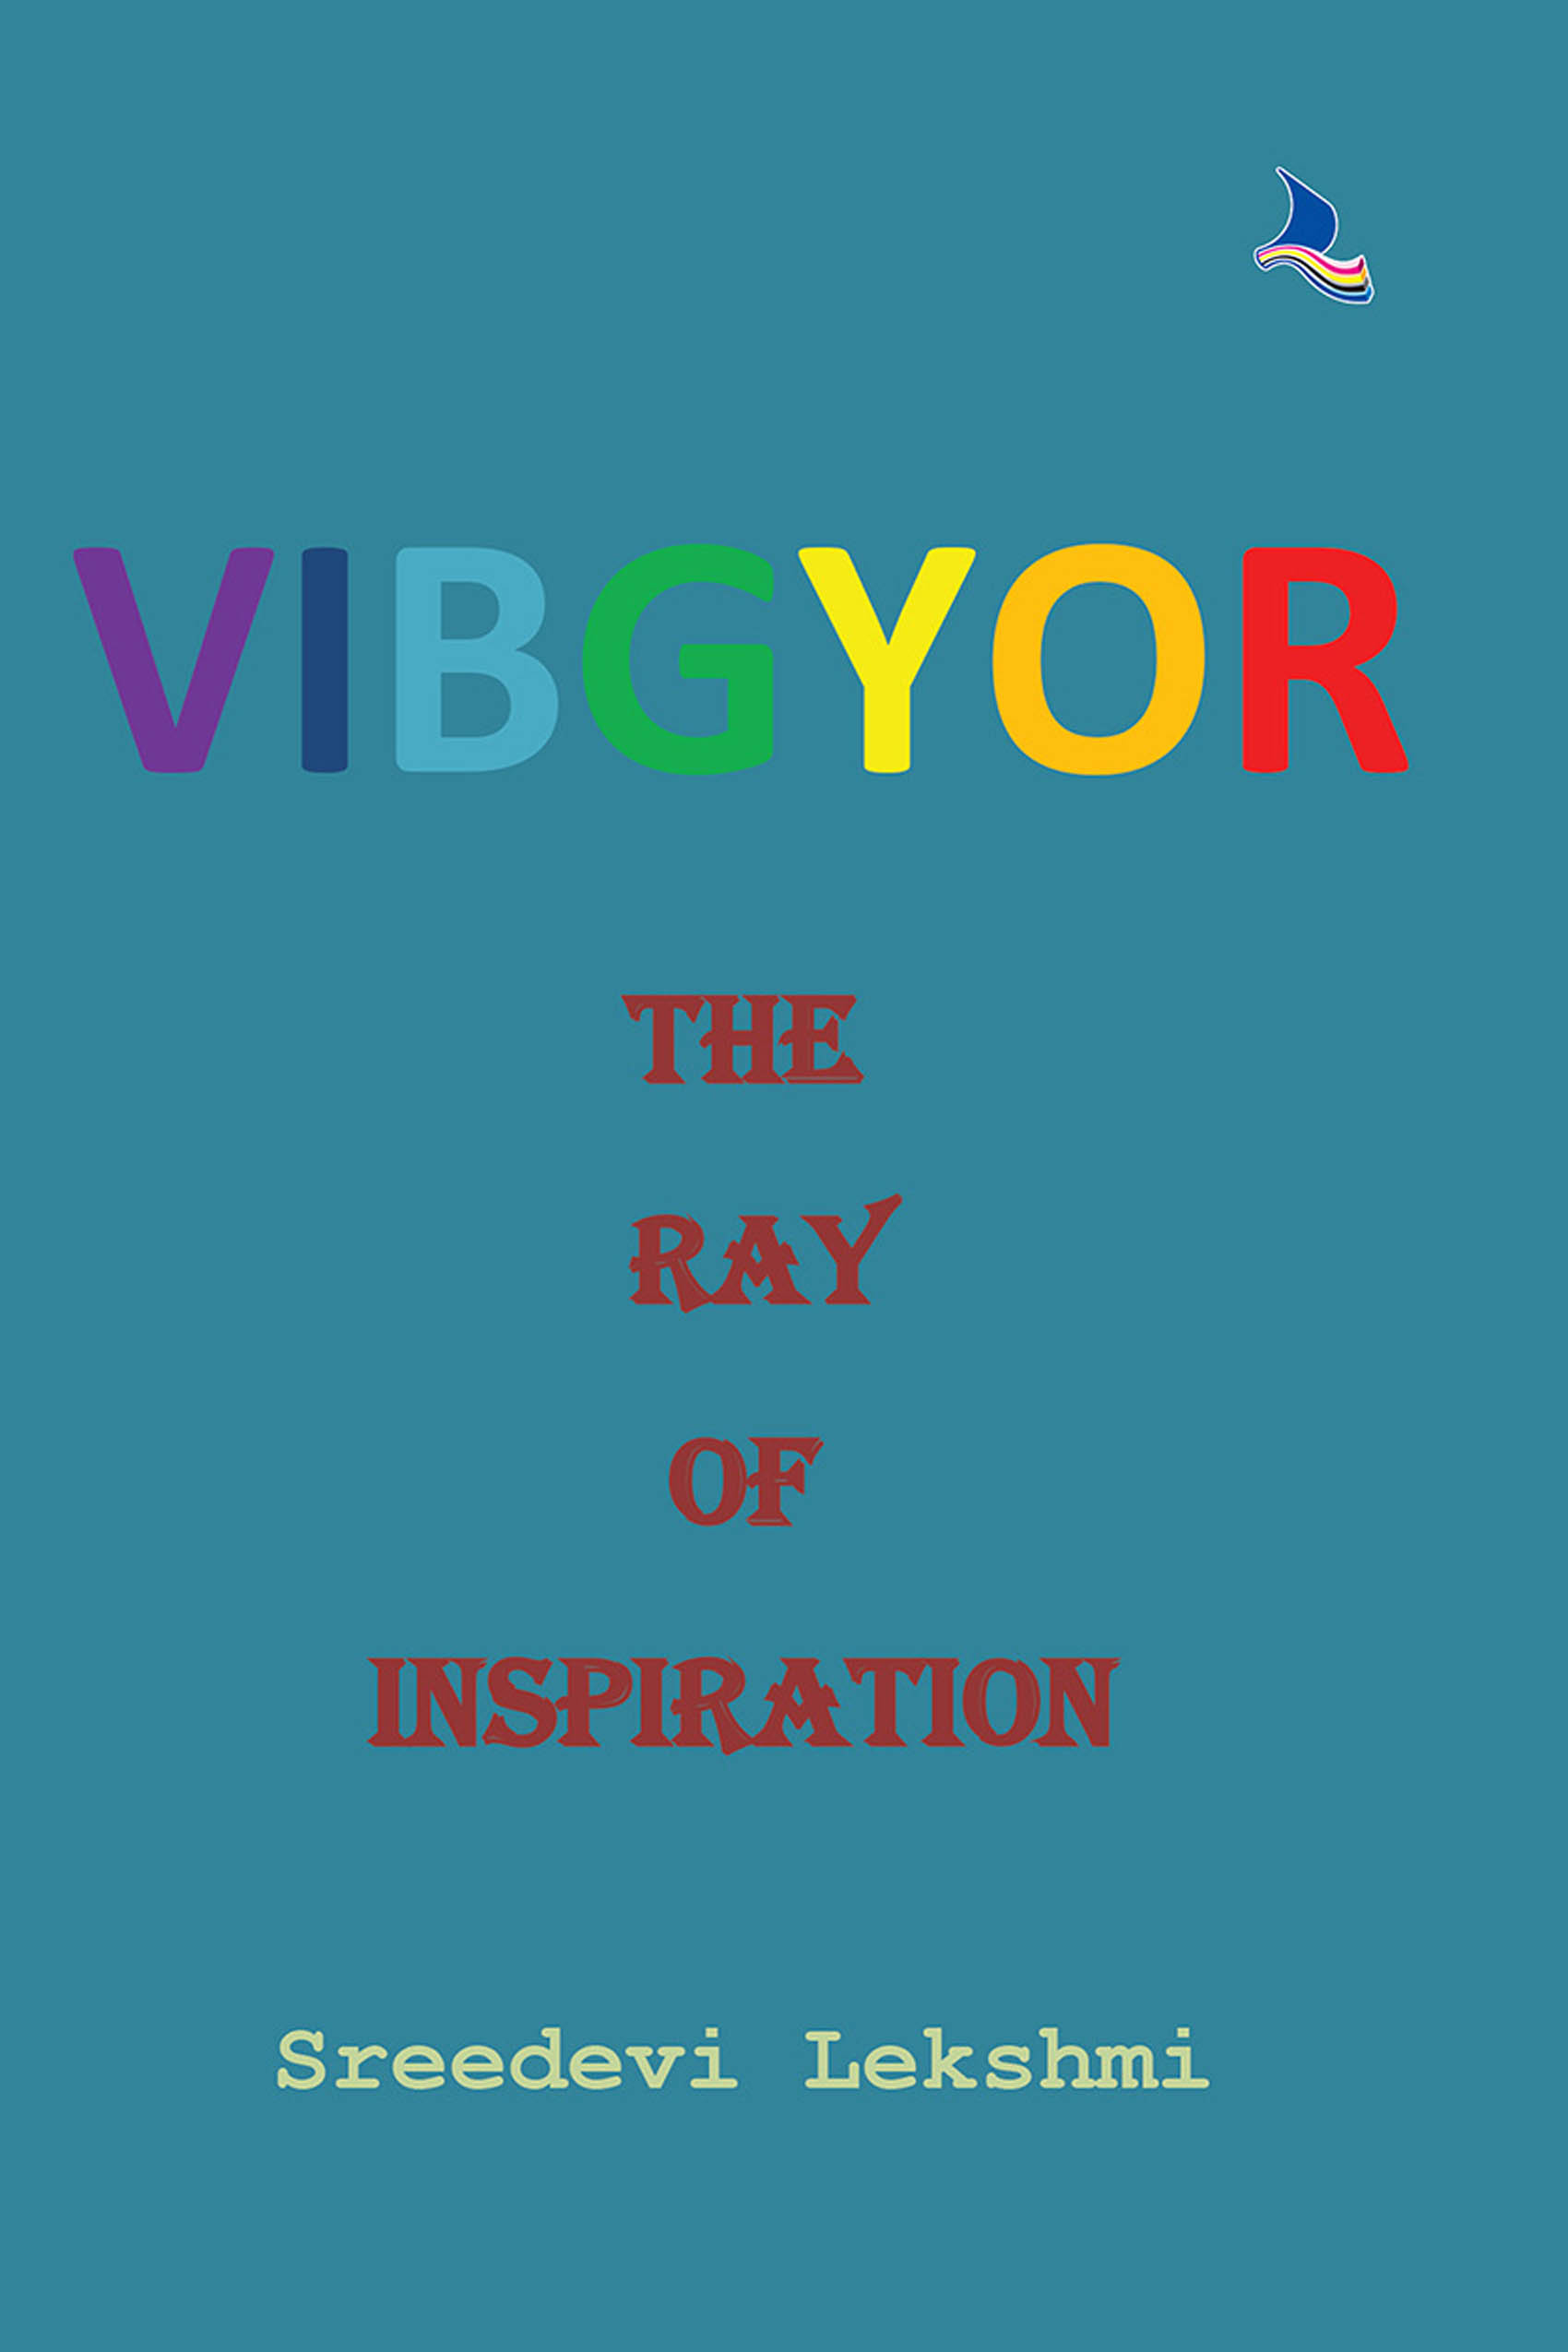 Vibgyor-The ray of Inspiration